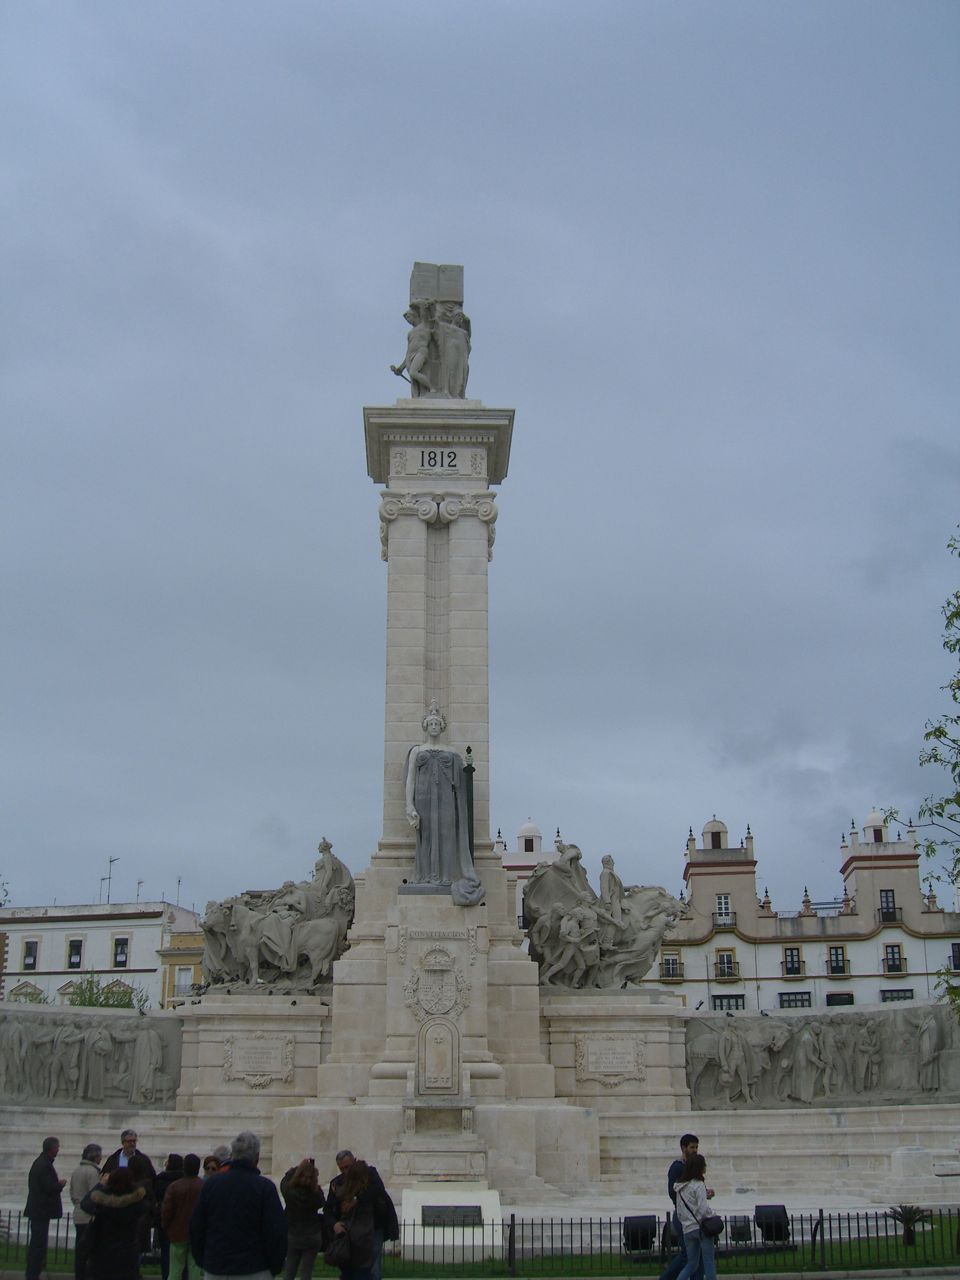 Cadiz Plaza de Espana, Monument from outside